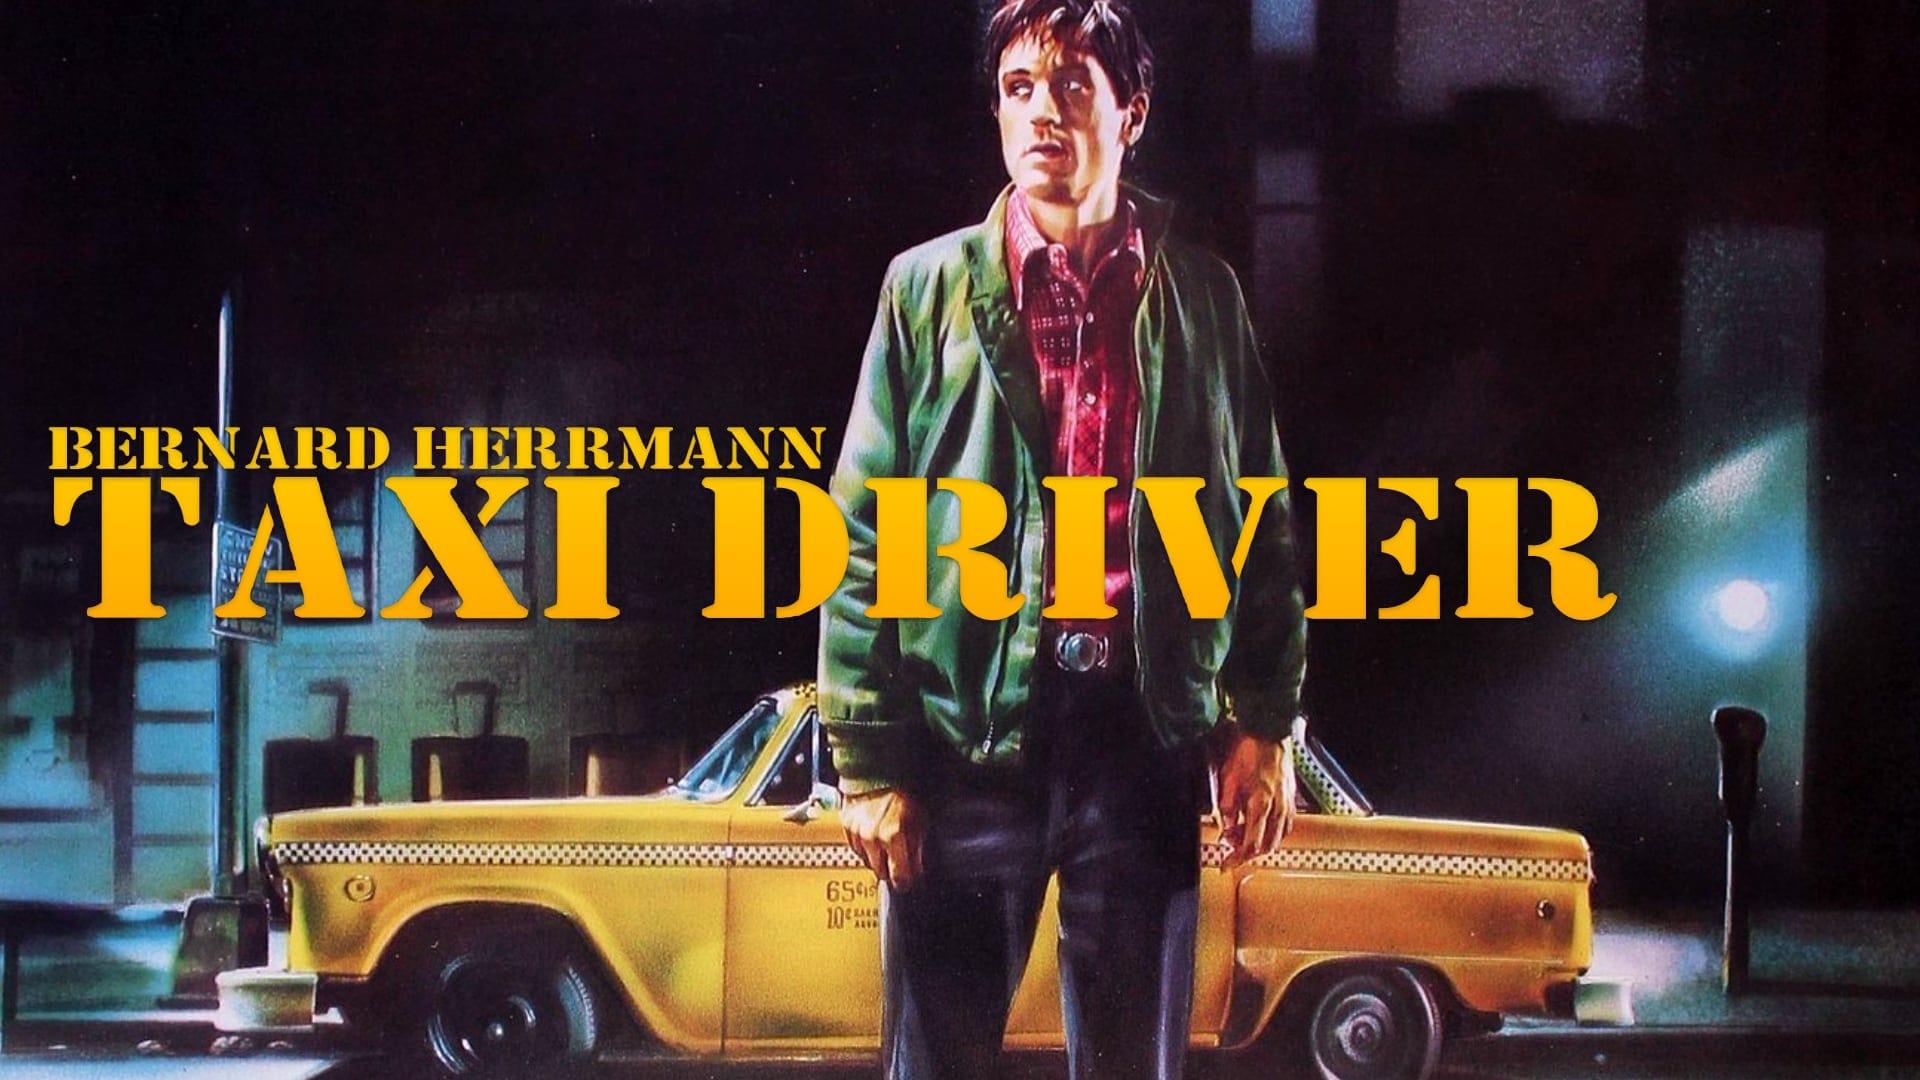 Bernard Herrmann's Taxi Driver Score Study - Academy of Scoring Arts